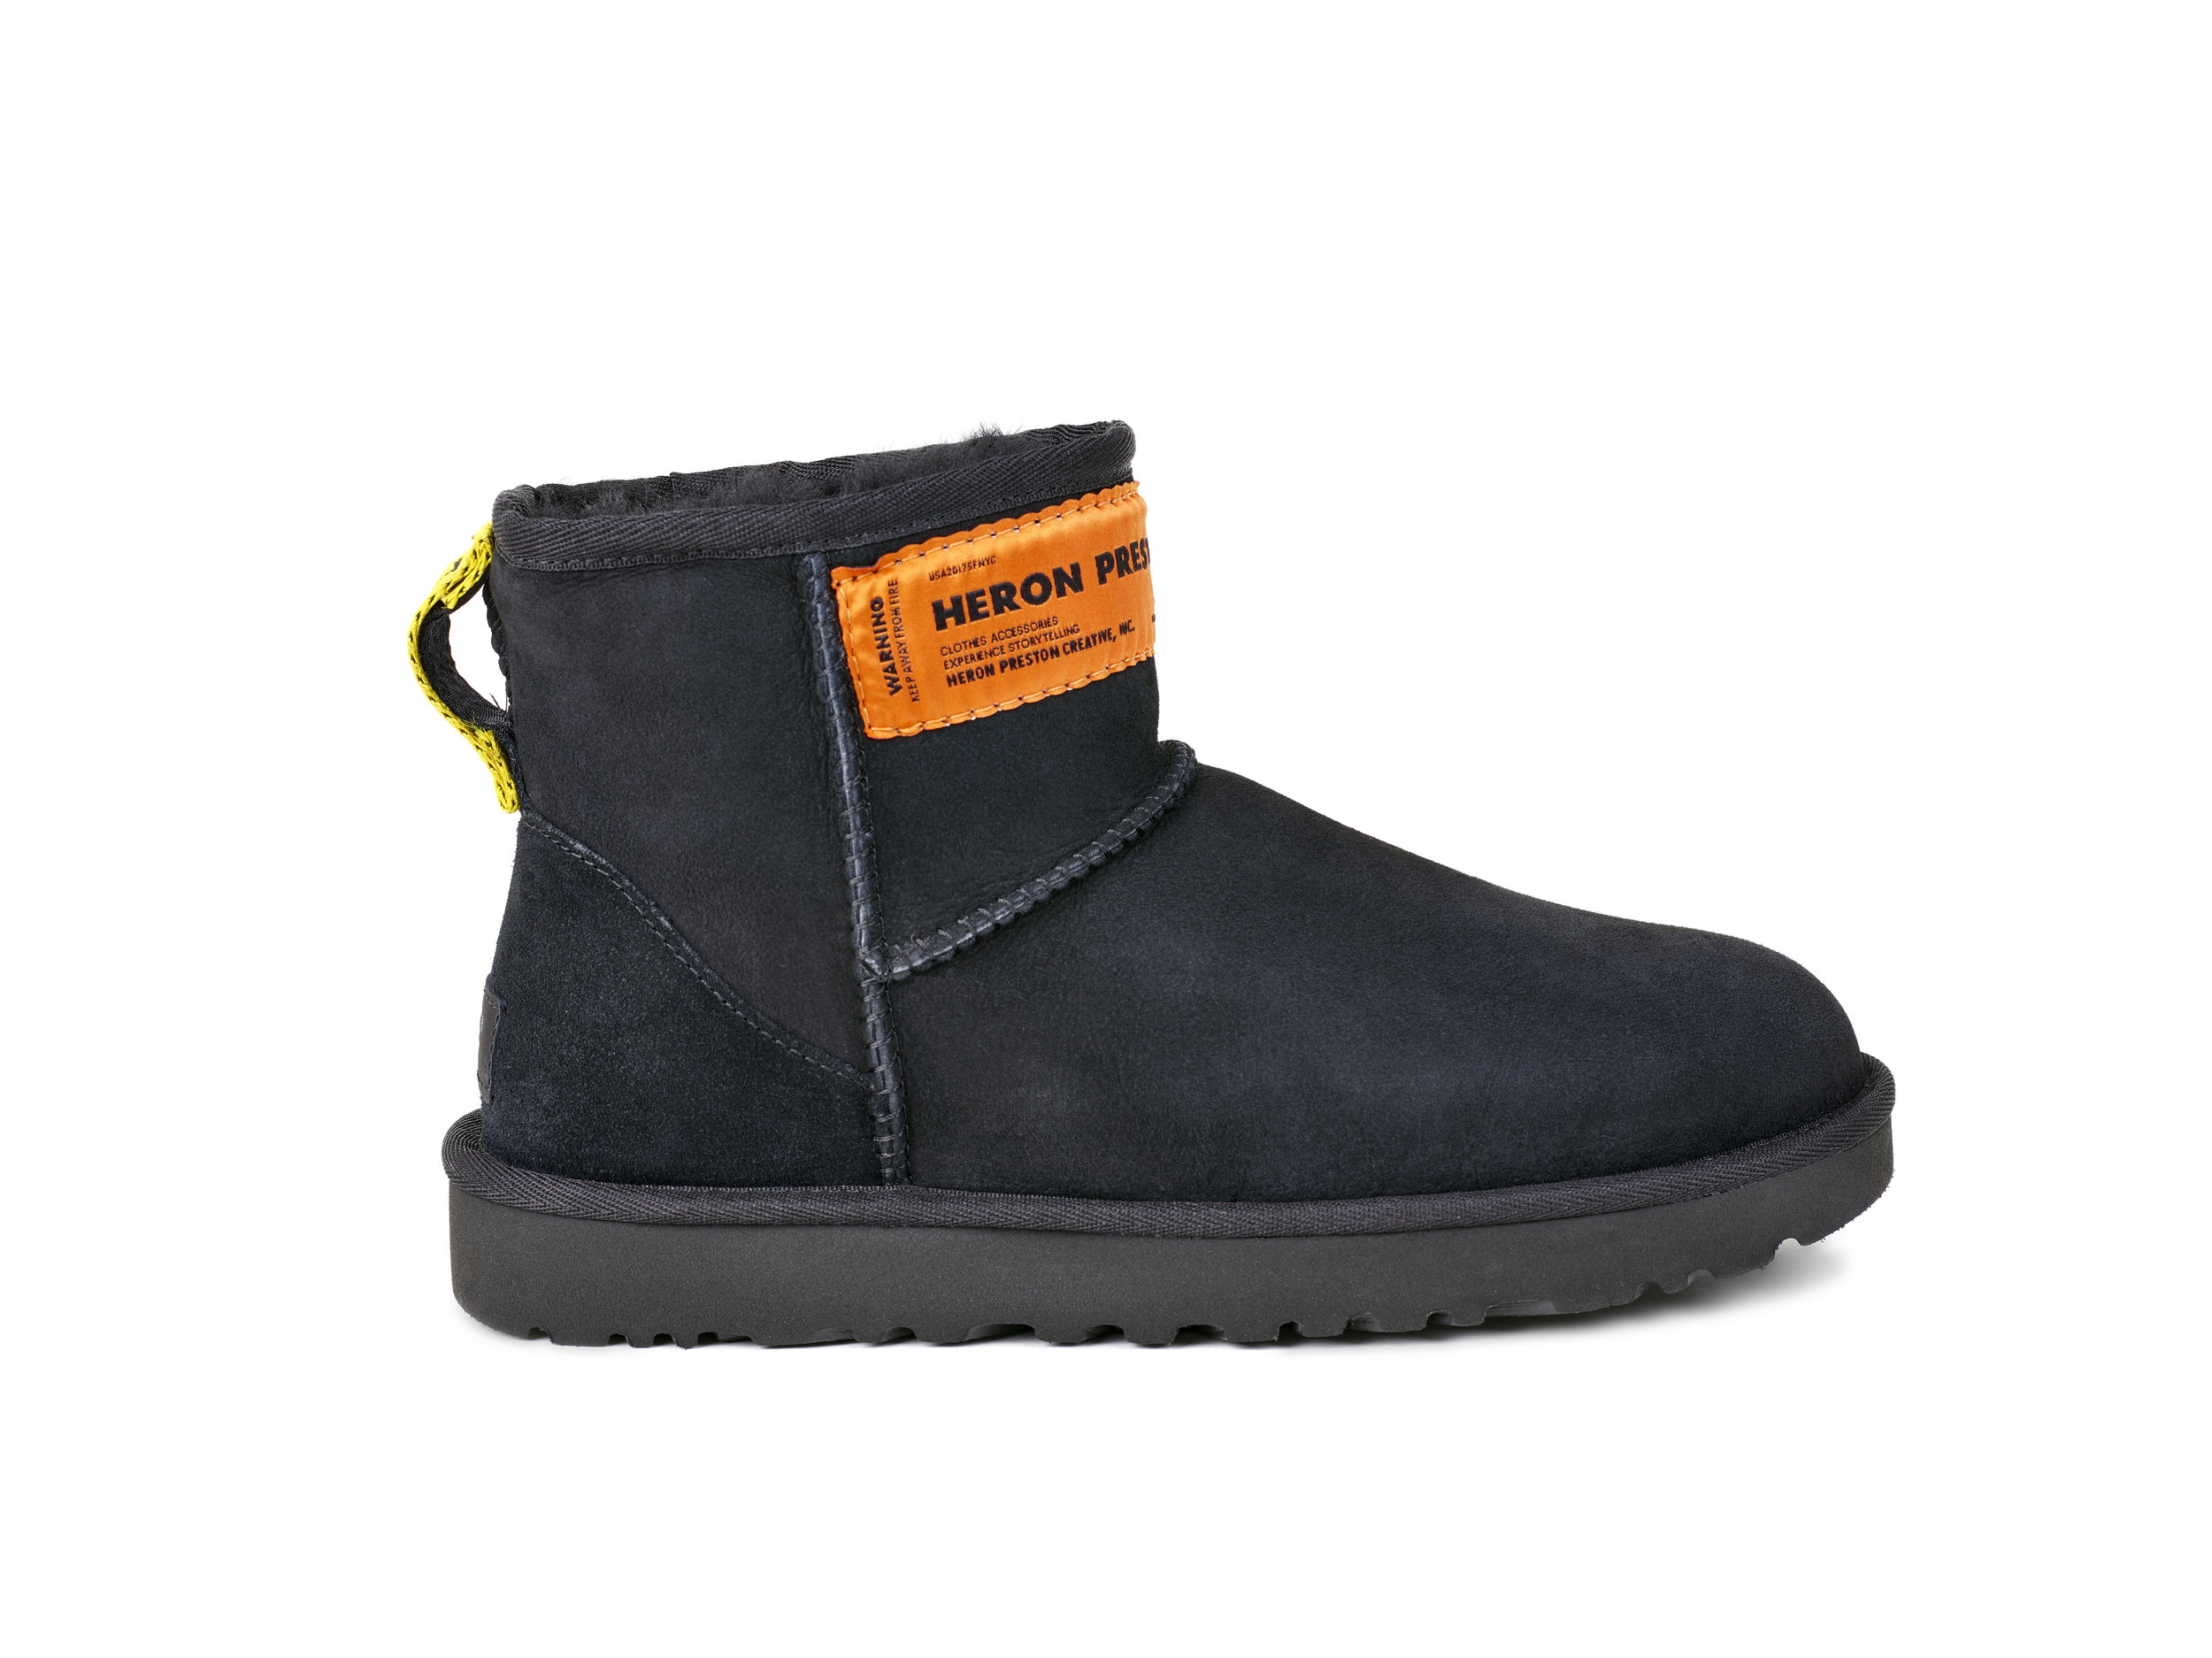 Heron Preston x Ugg Is the Streetwear-Friendly Cozy Boot You Didn